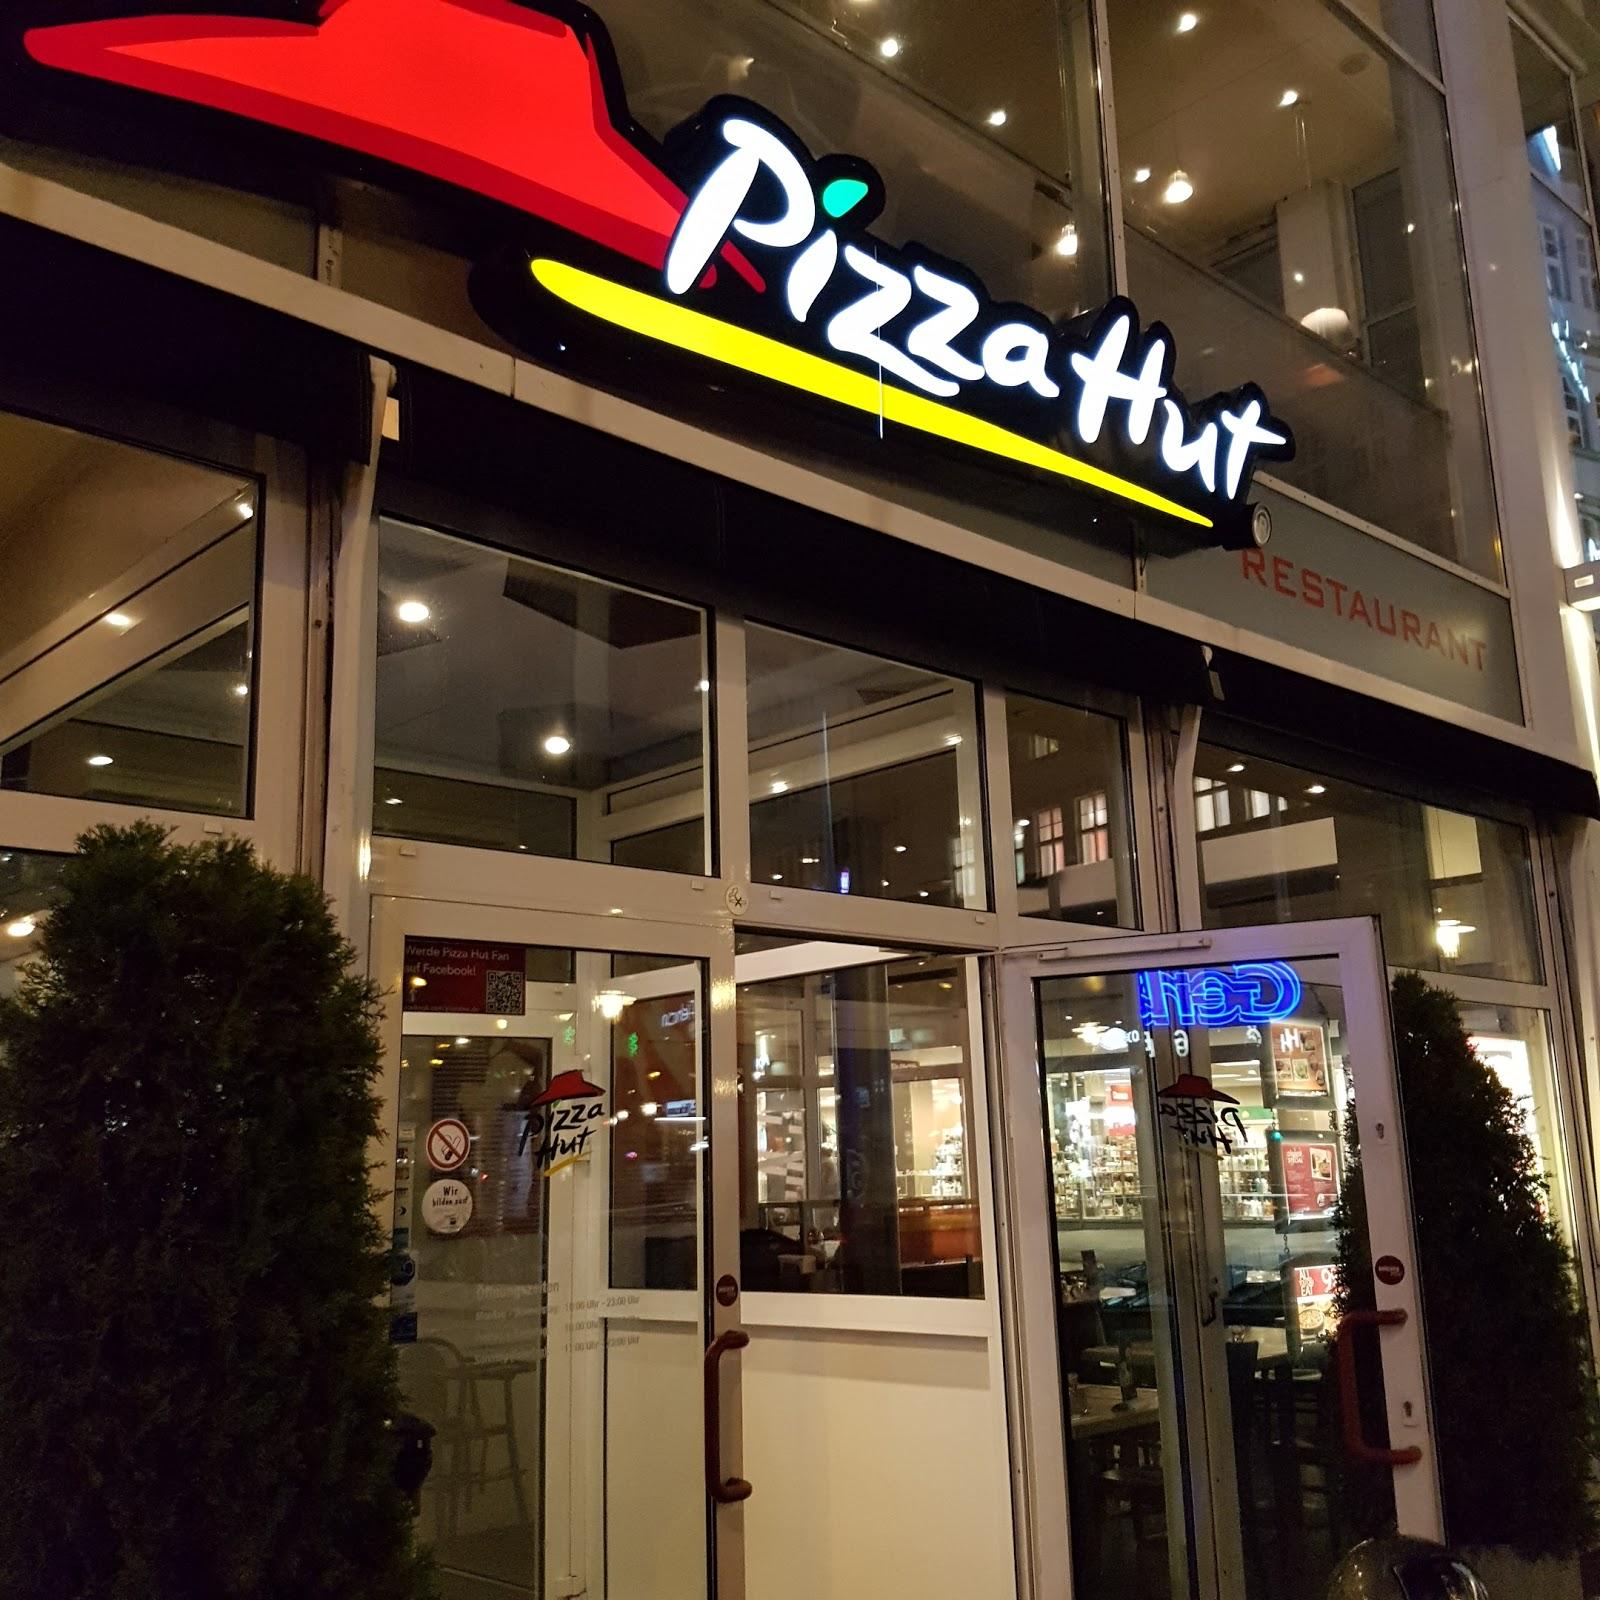 Restaurant "Pizza Hut Bielefeld, Jahnplatz" in Bielefeld